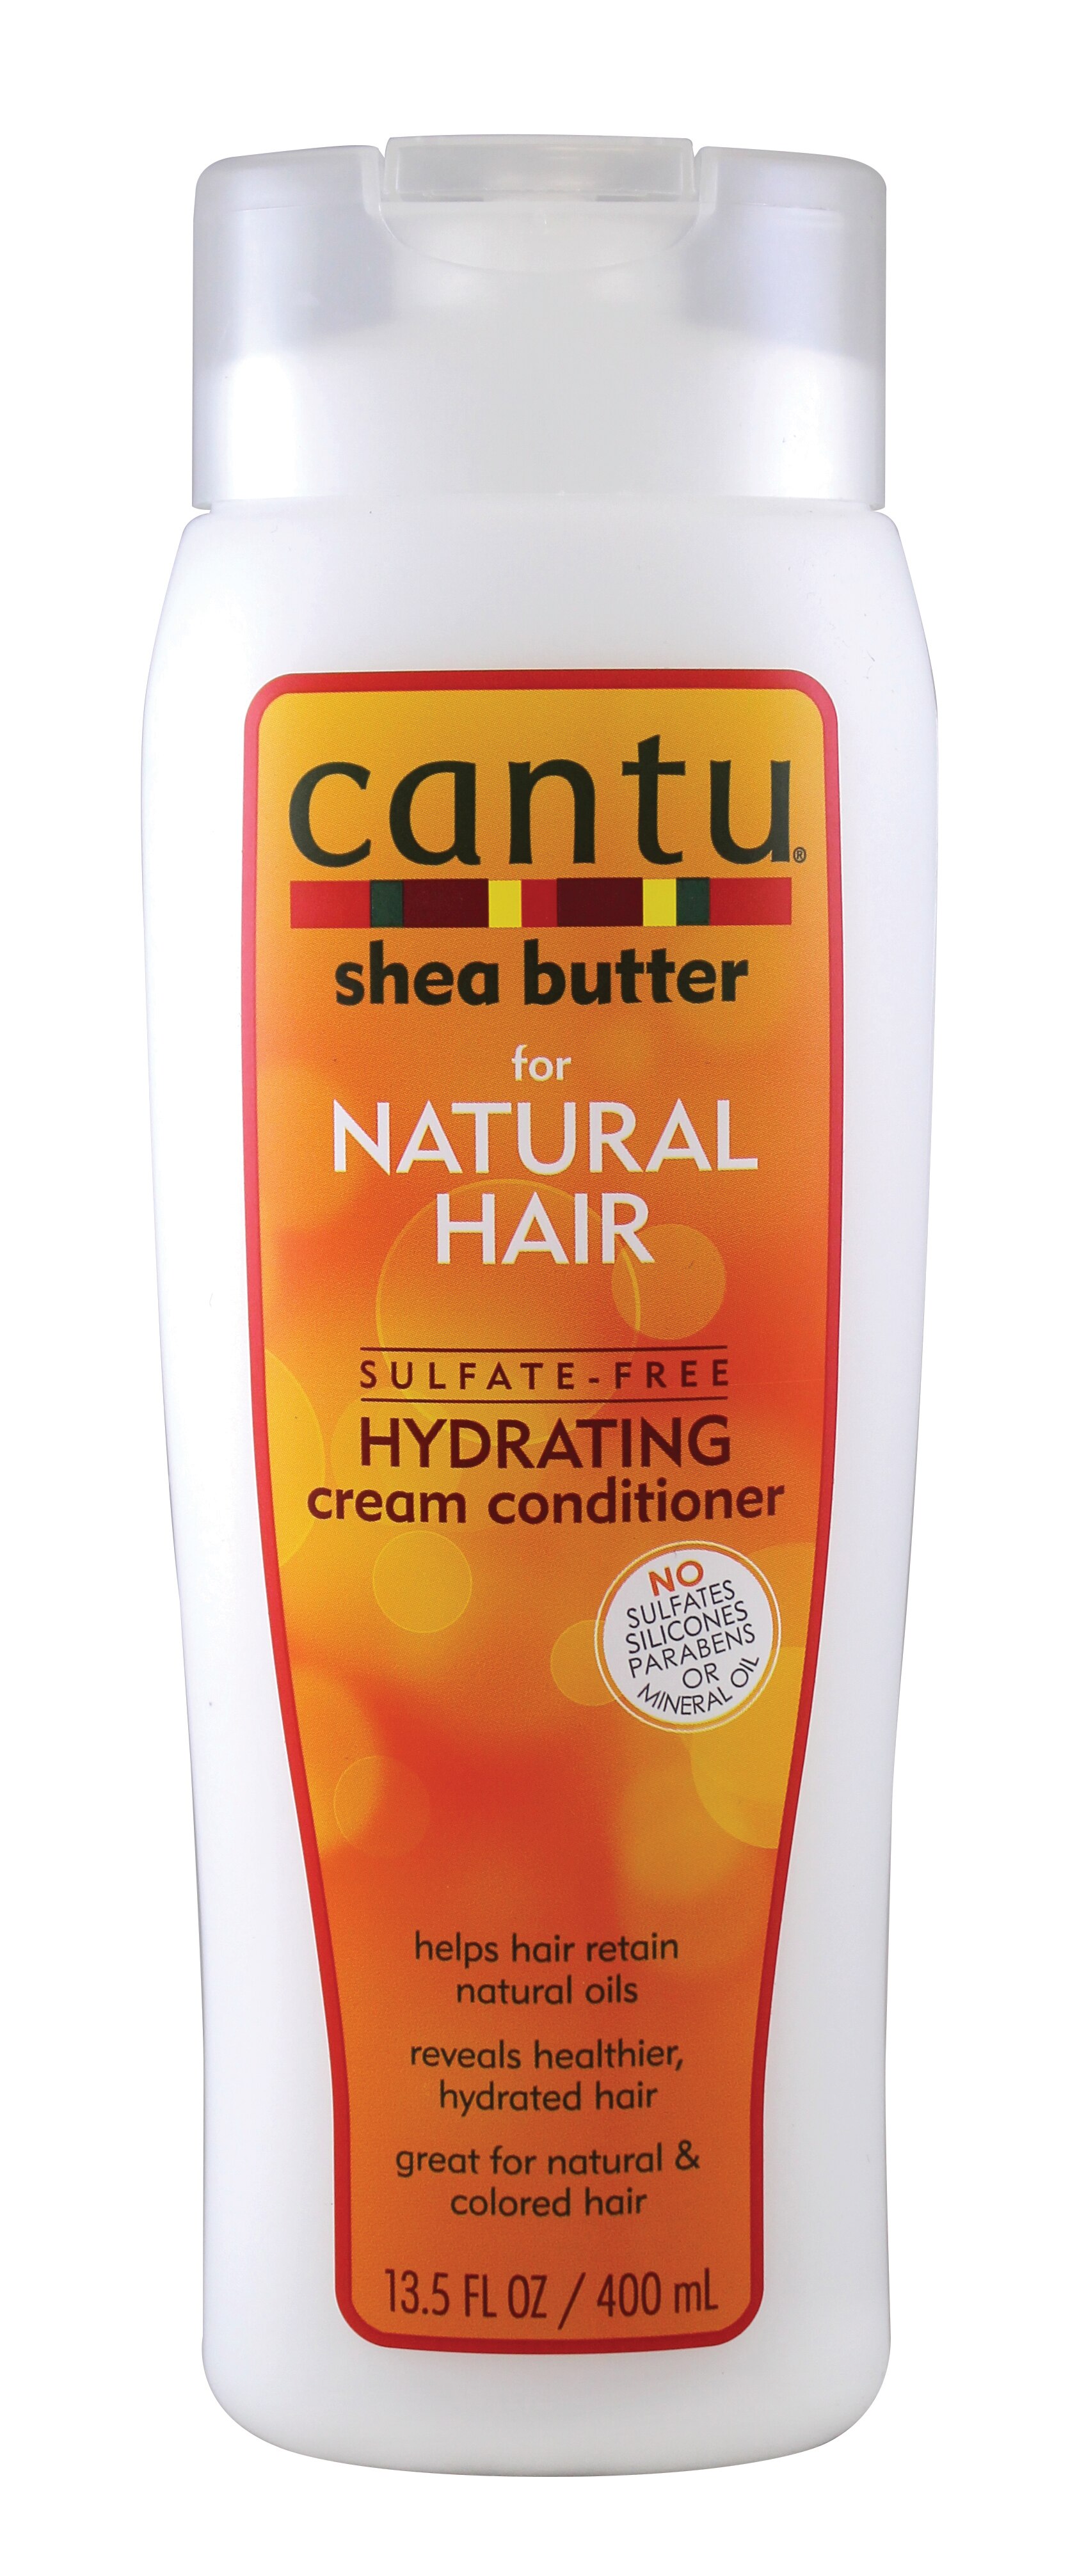 Cantu Shea Butter Sulfate-Free Hydrating Cream Conditioner, 13.5 OZ